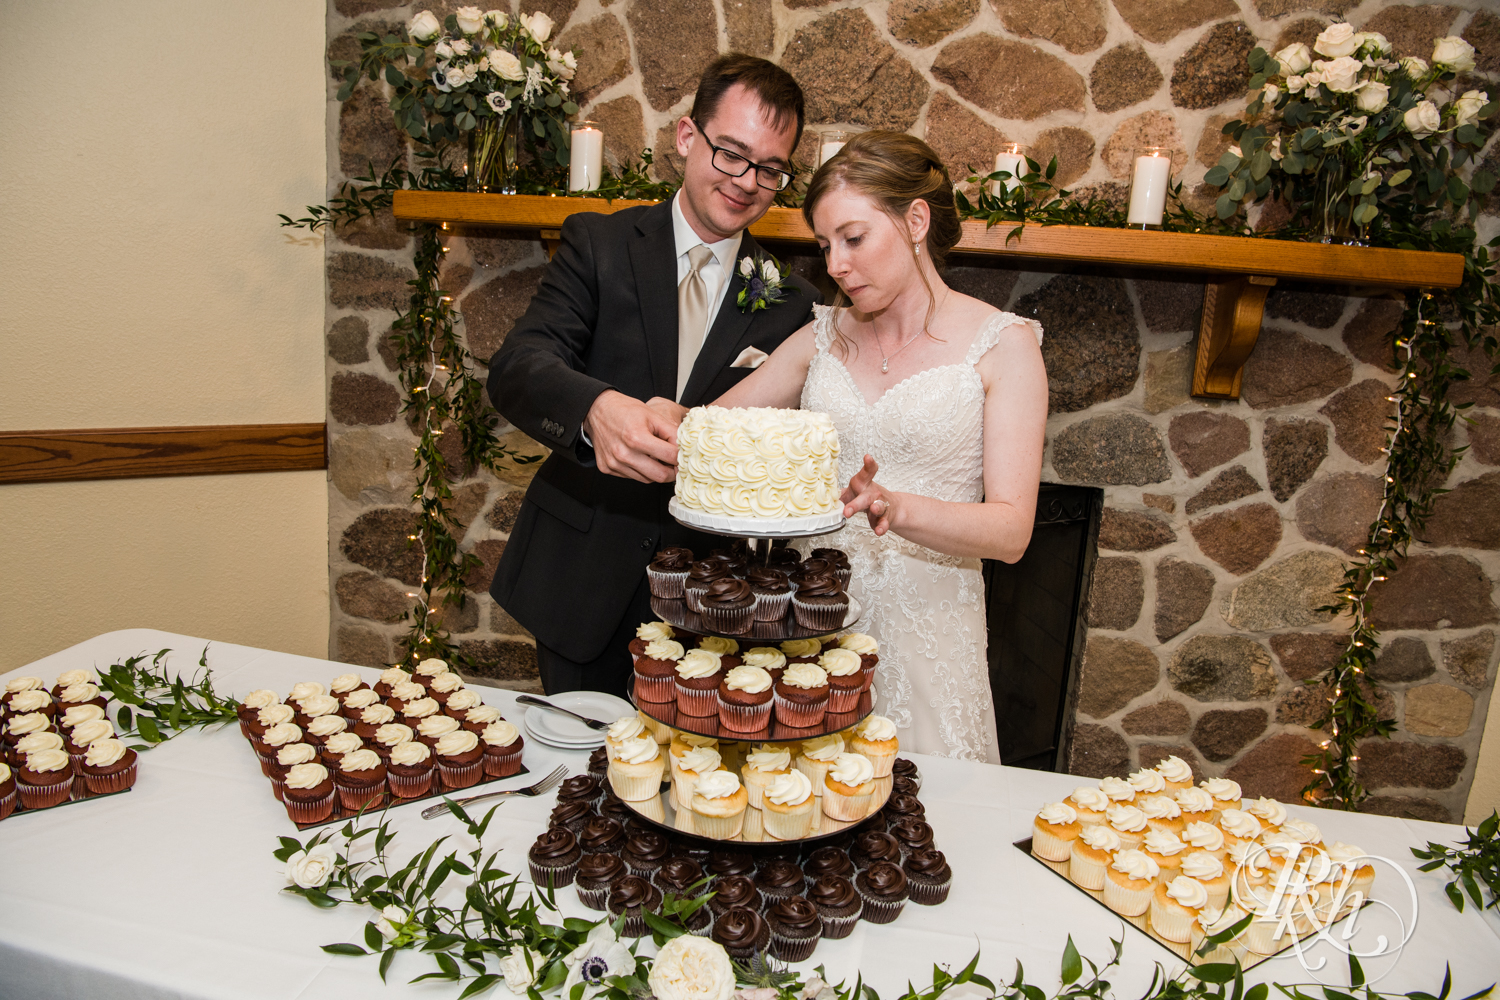 Bride and groom cut cake during wedding reception speeches at Oak Glen Golf Course in Stillwater, Minnesota.